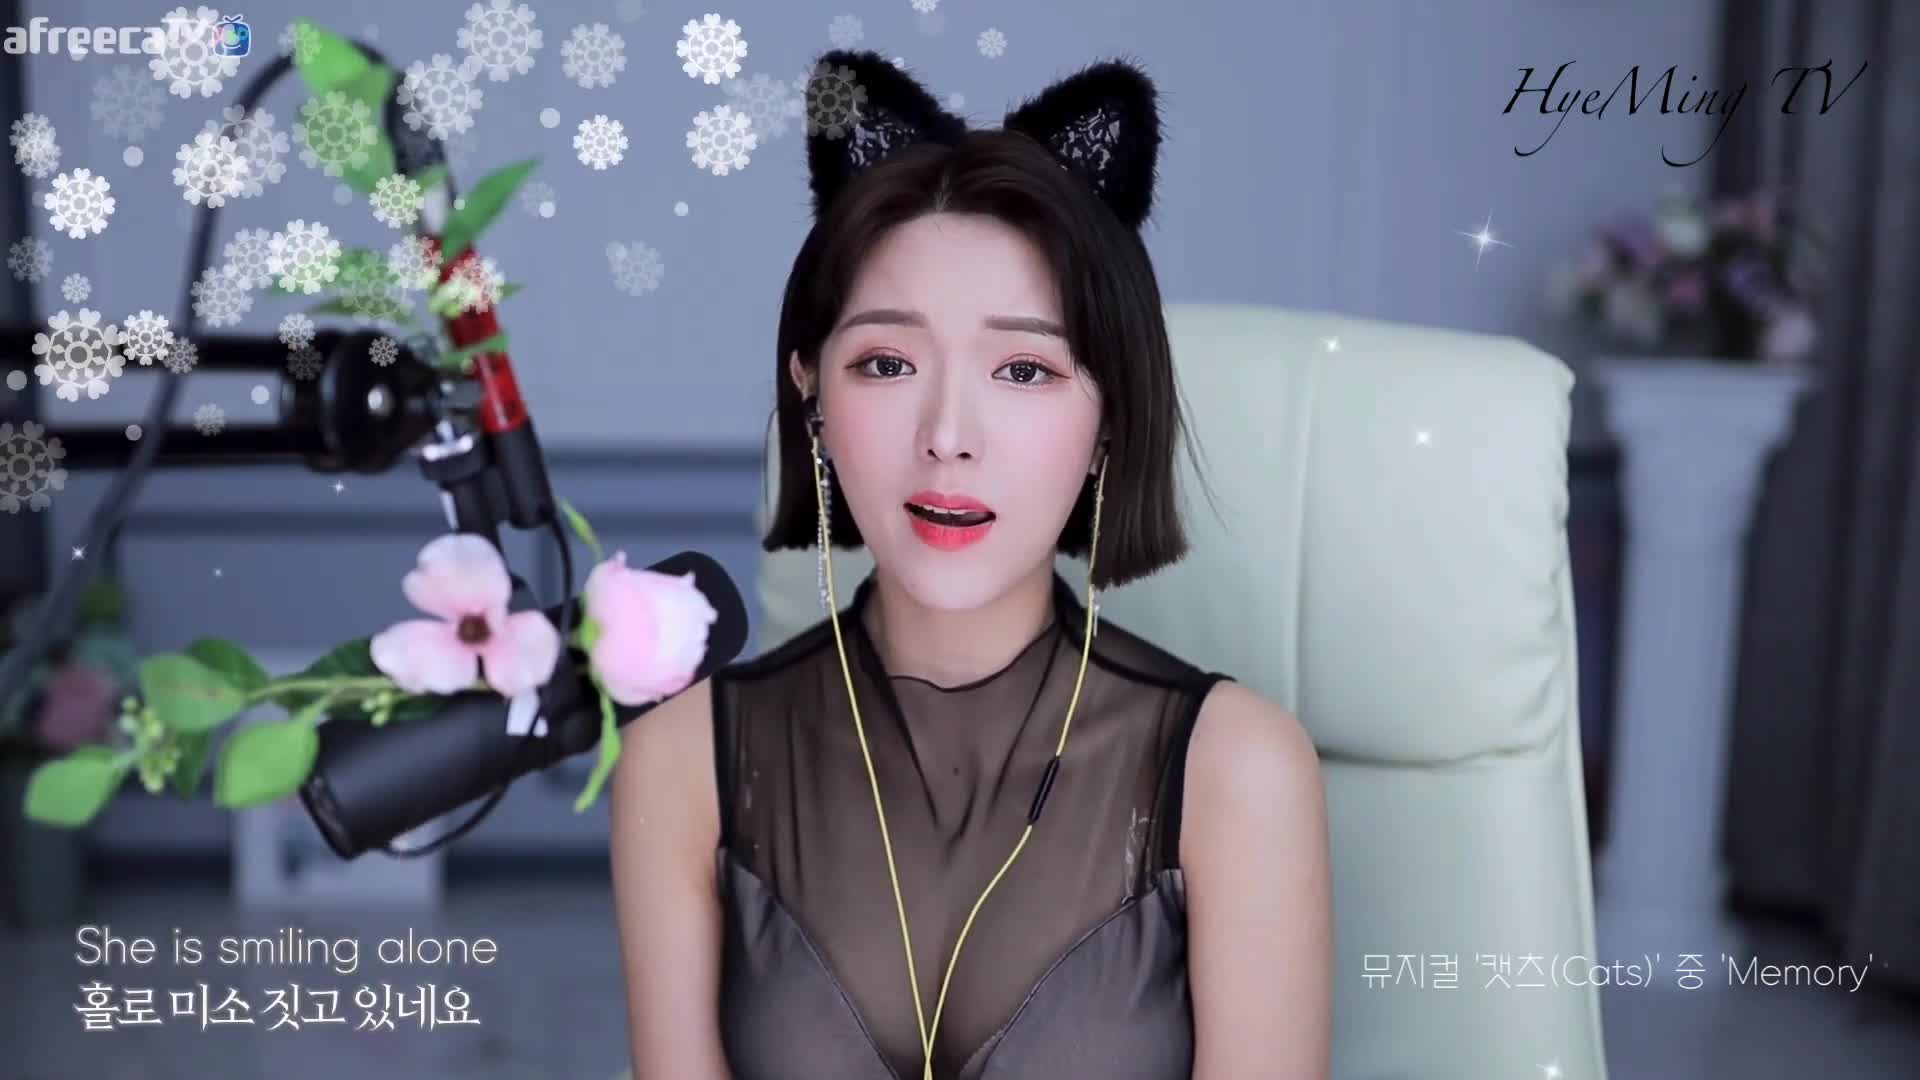 Musical Cats(뮤지컬 캣츠) – 메모리 (Memory) Cover By 혜밍